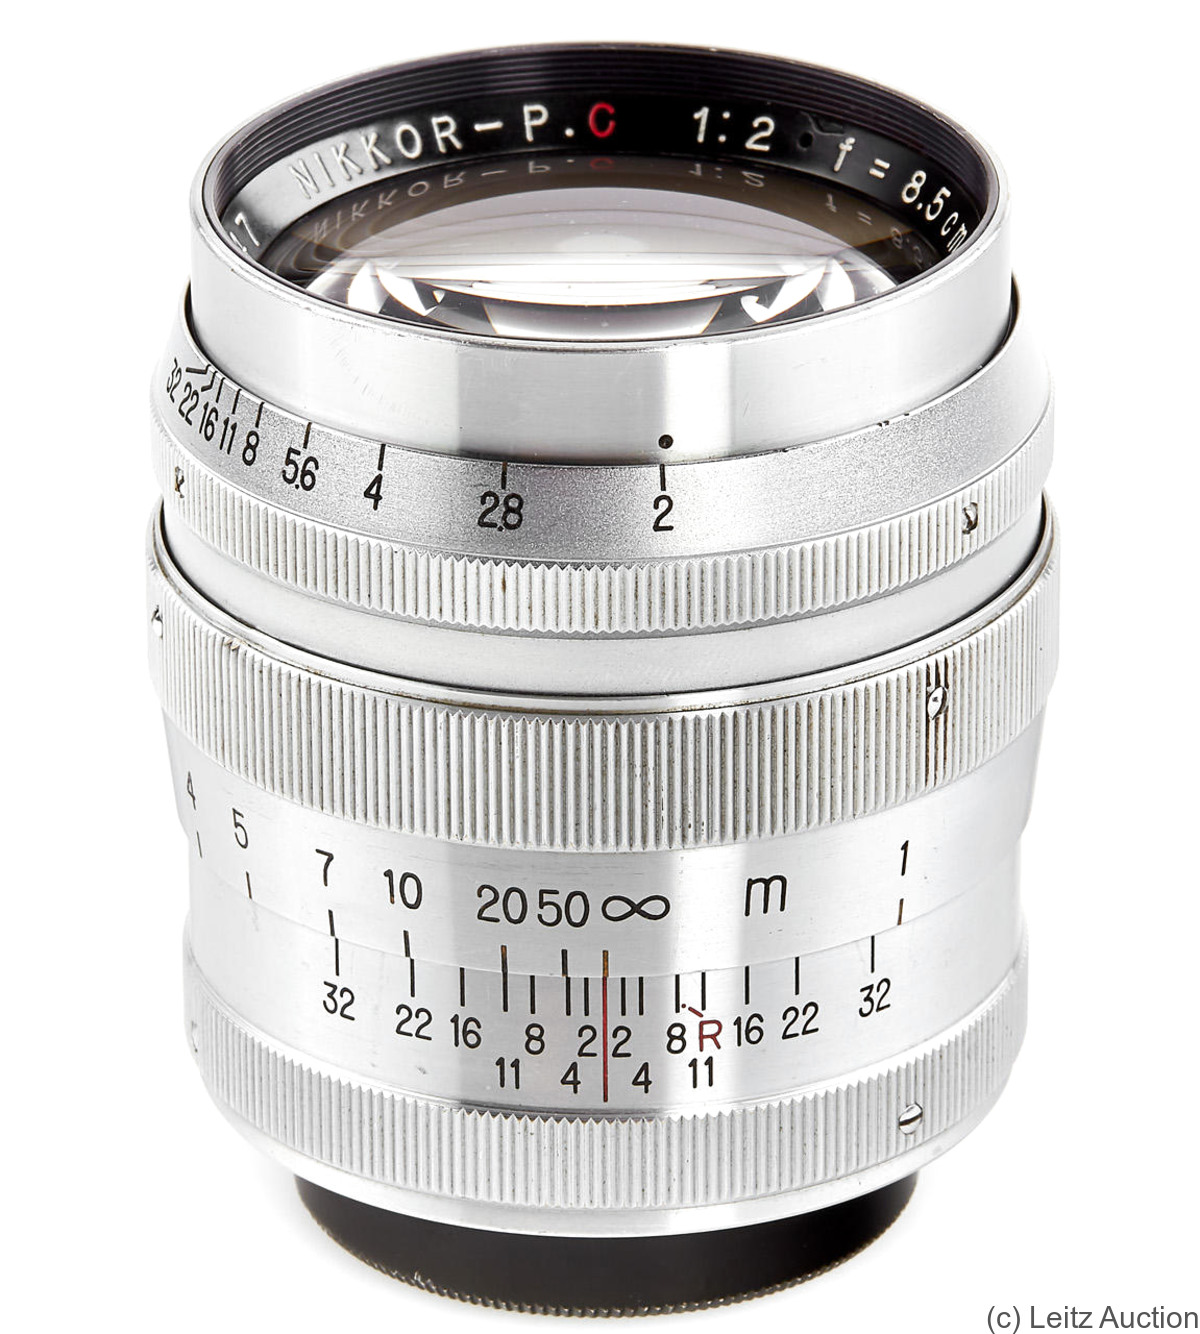 Nikon: 85mm (8.5cm) f2 Nikkor-P.C (M39, chrome) camera